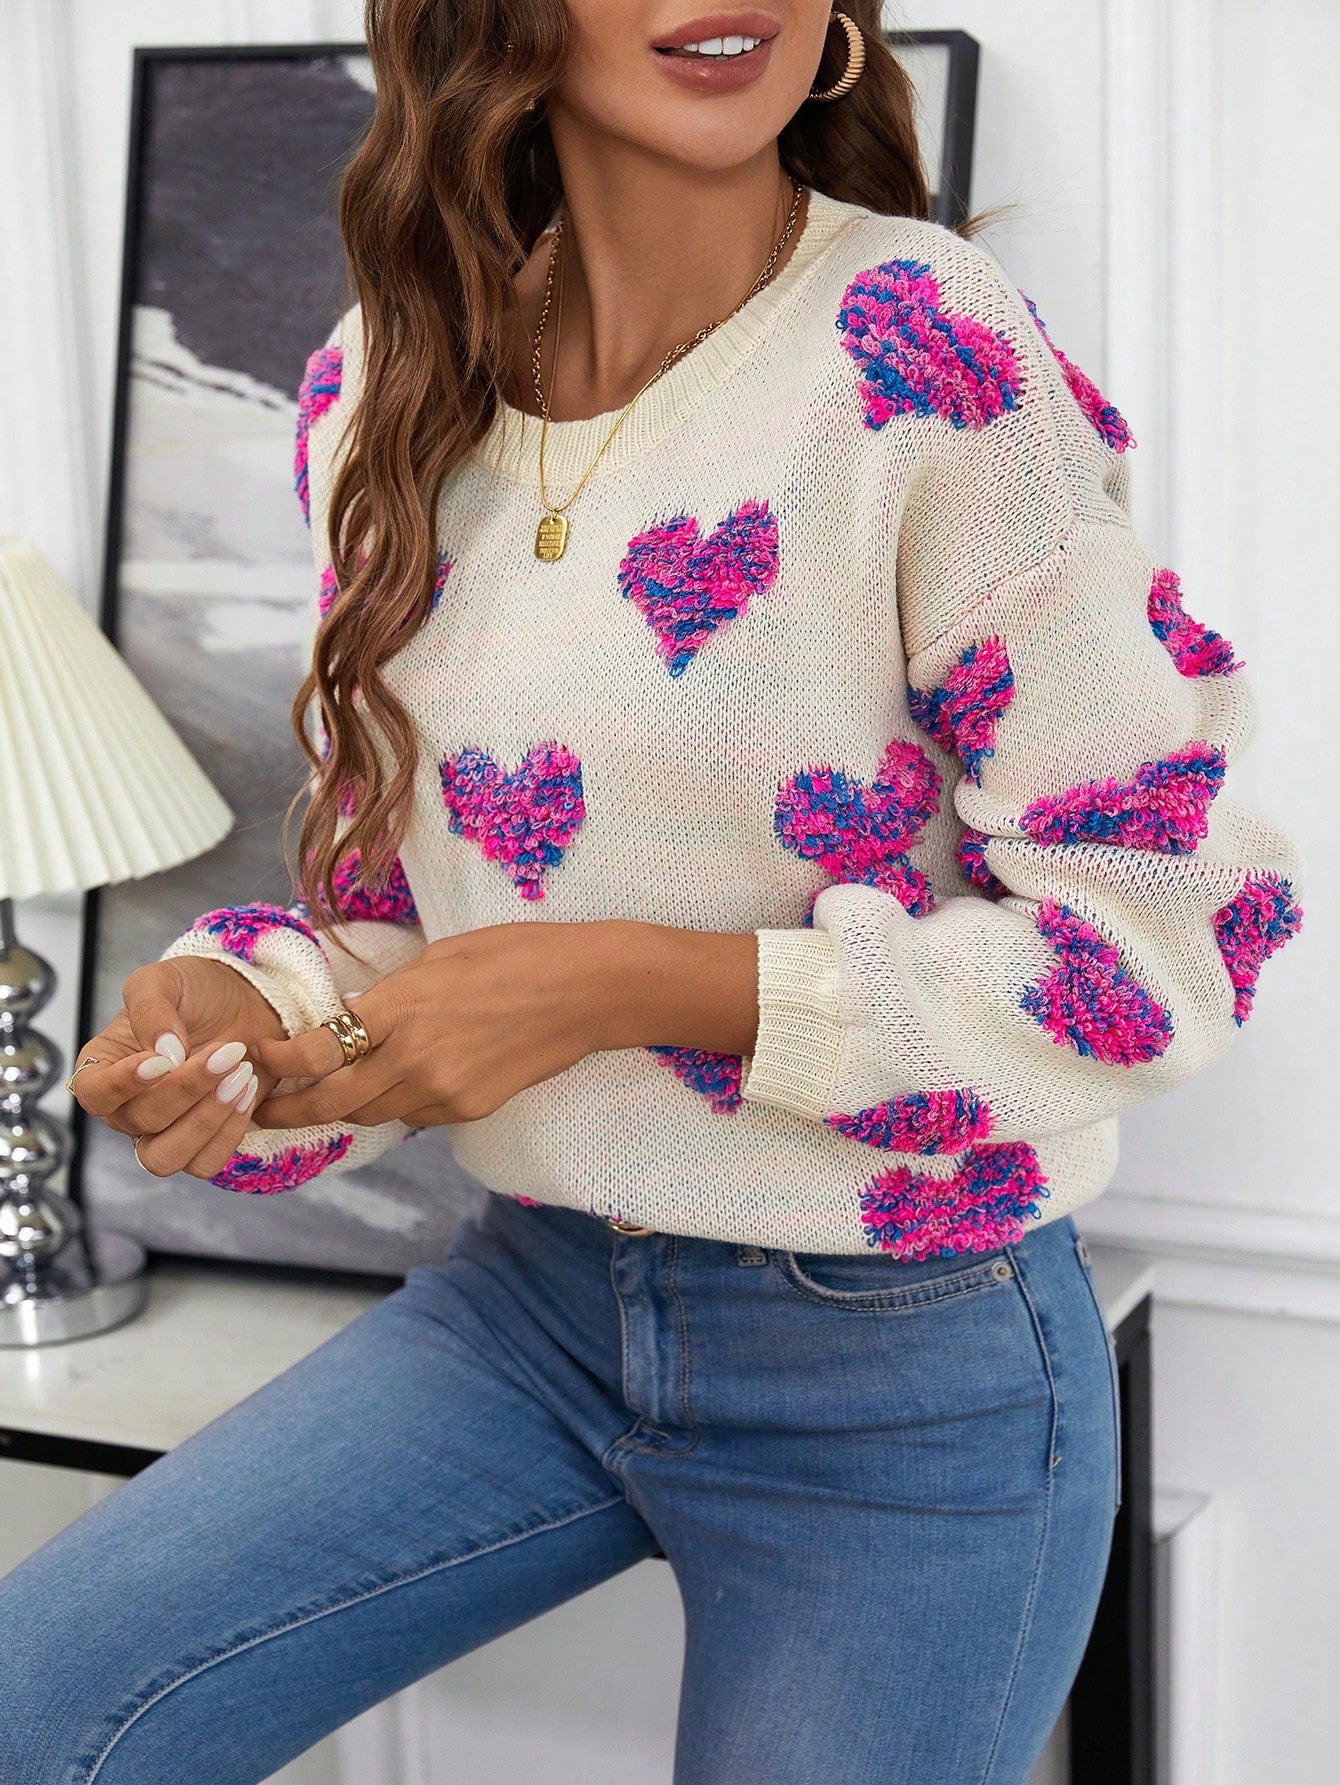 Cupid Heart Sweater